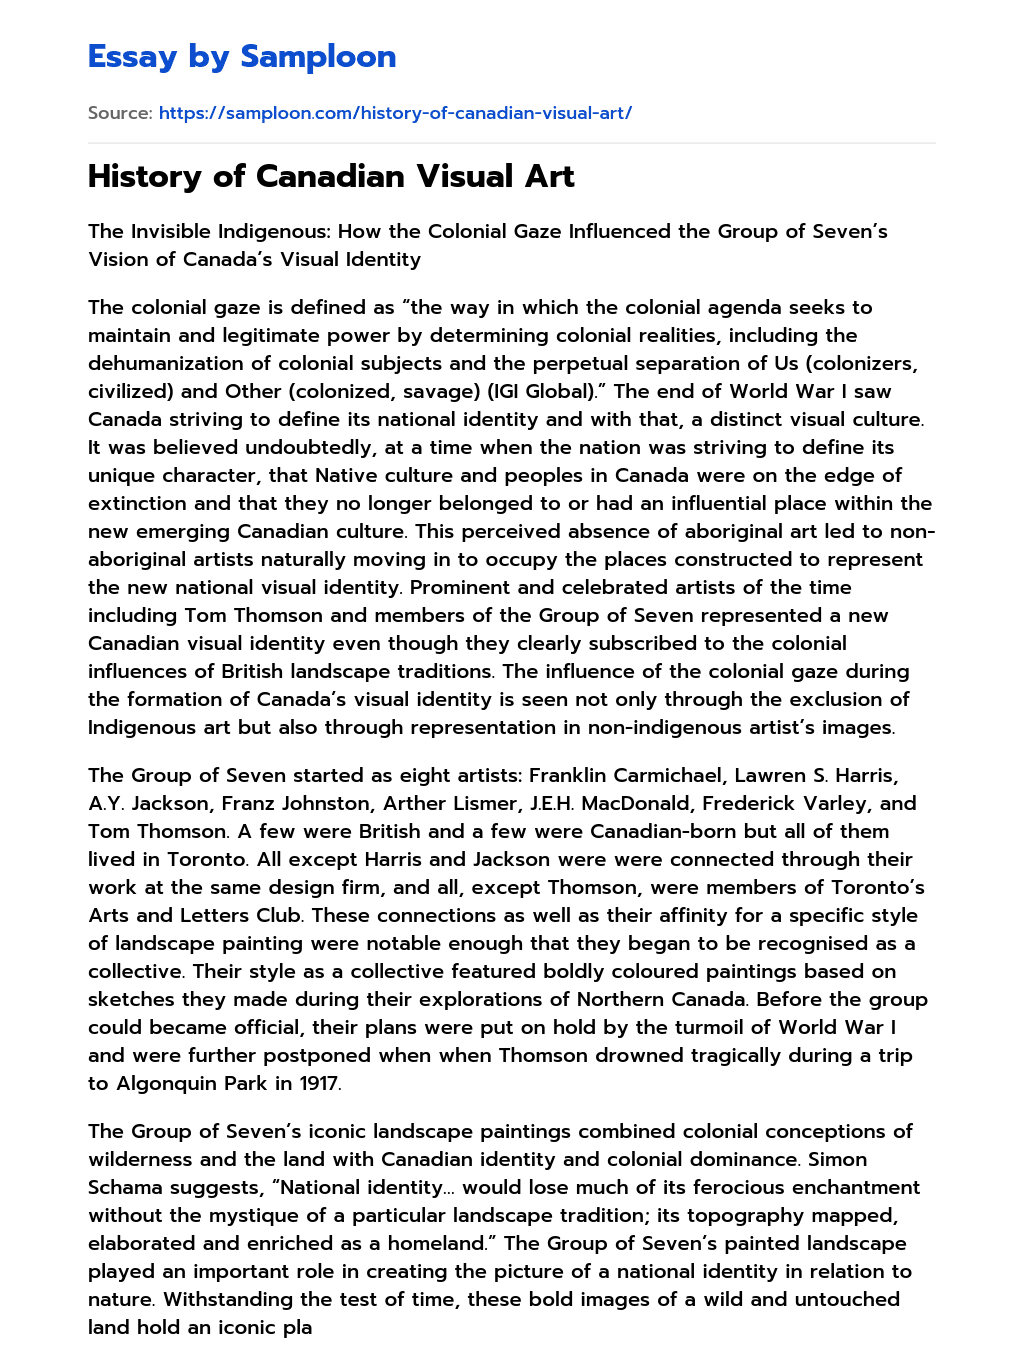 History of Canadian Visual Art essay